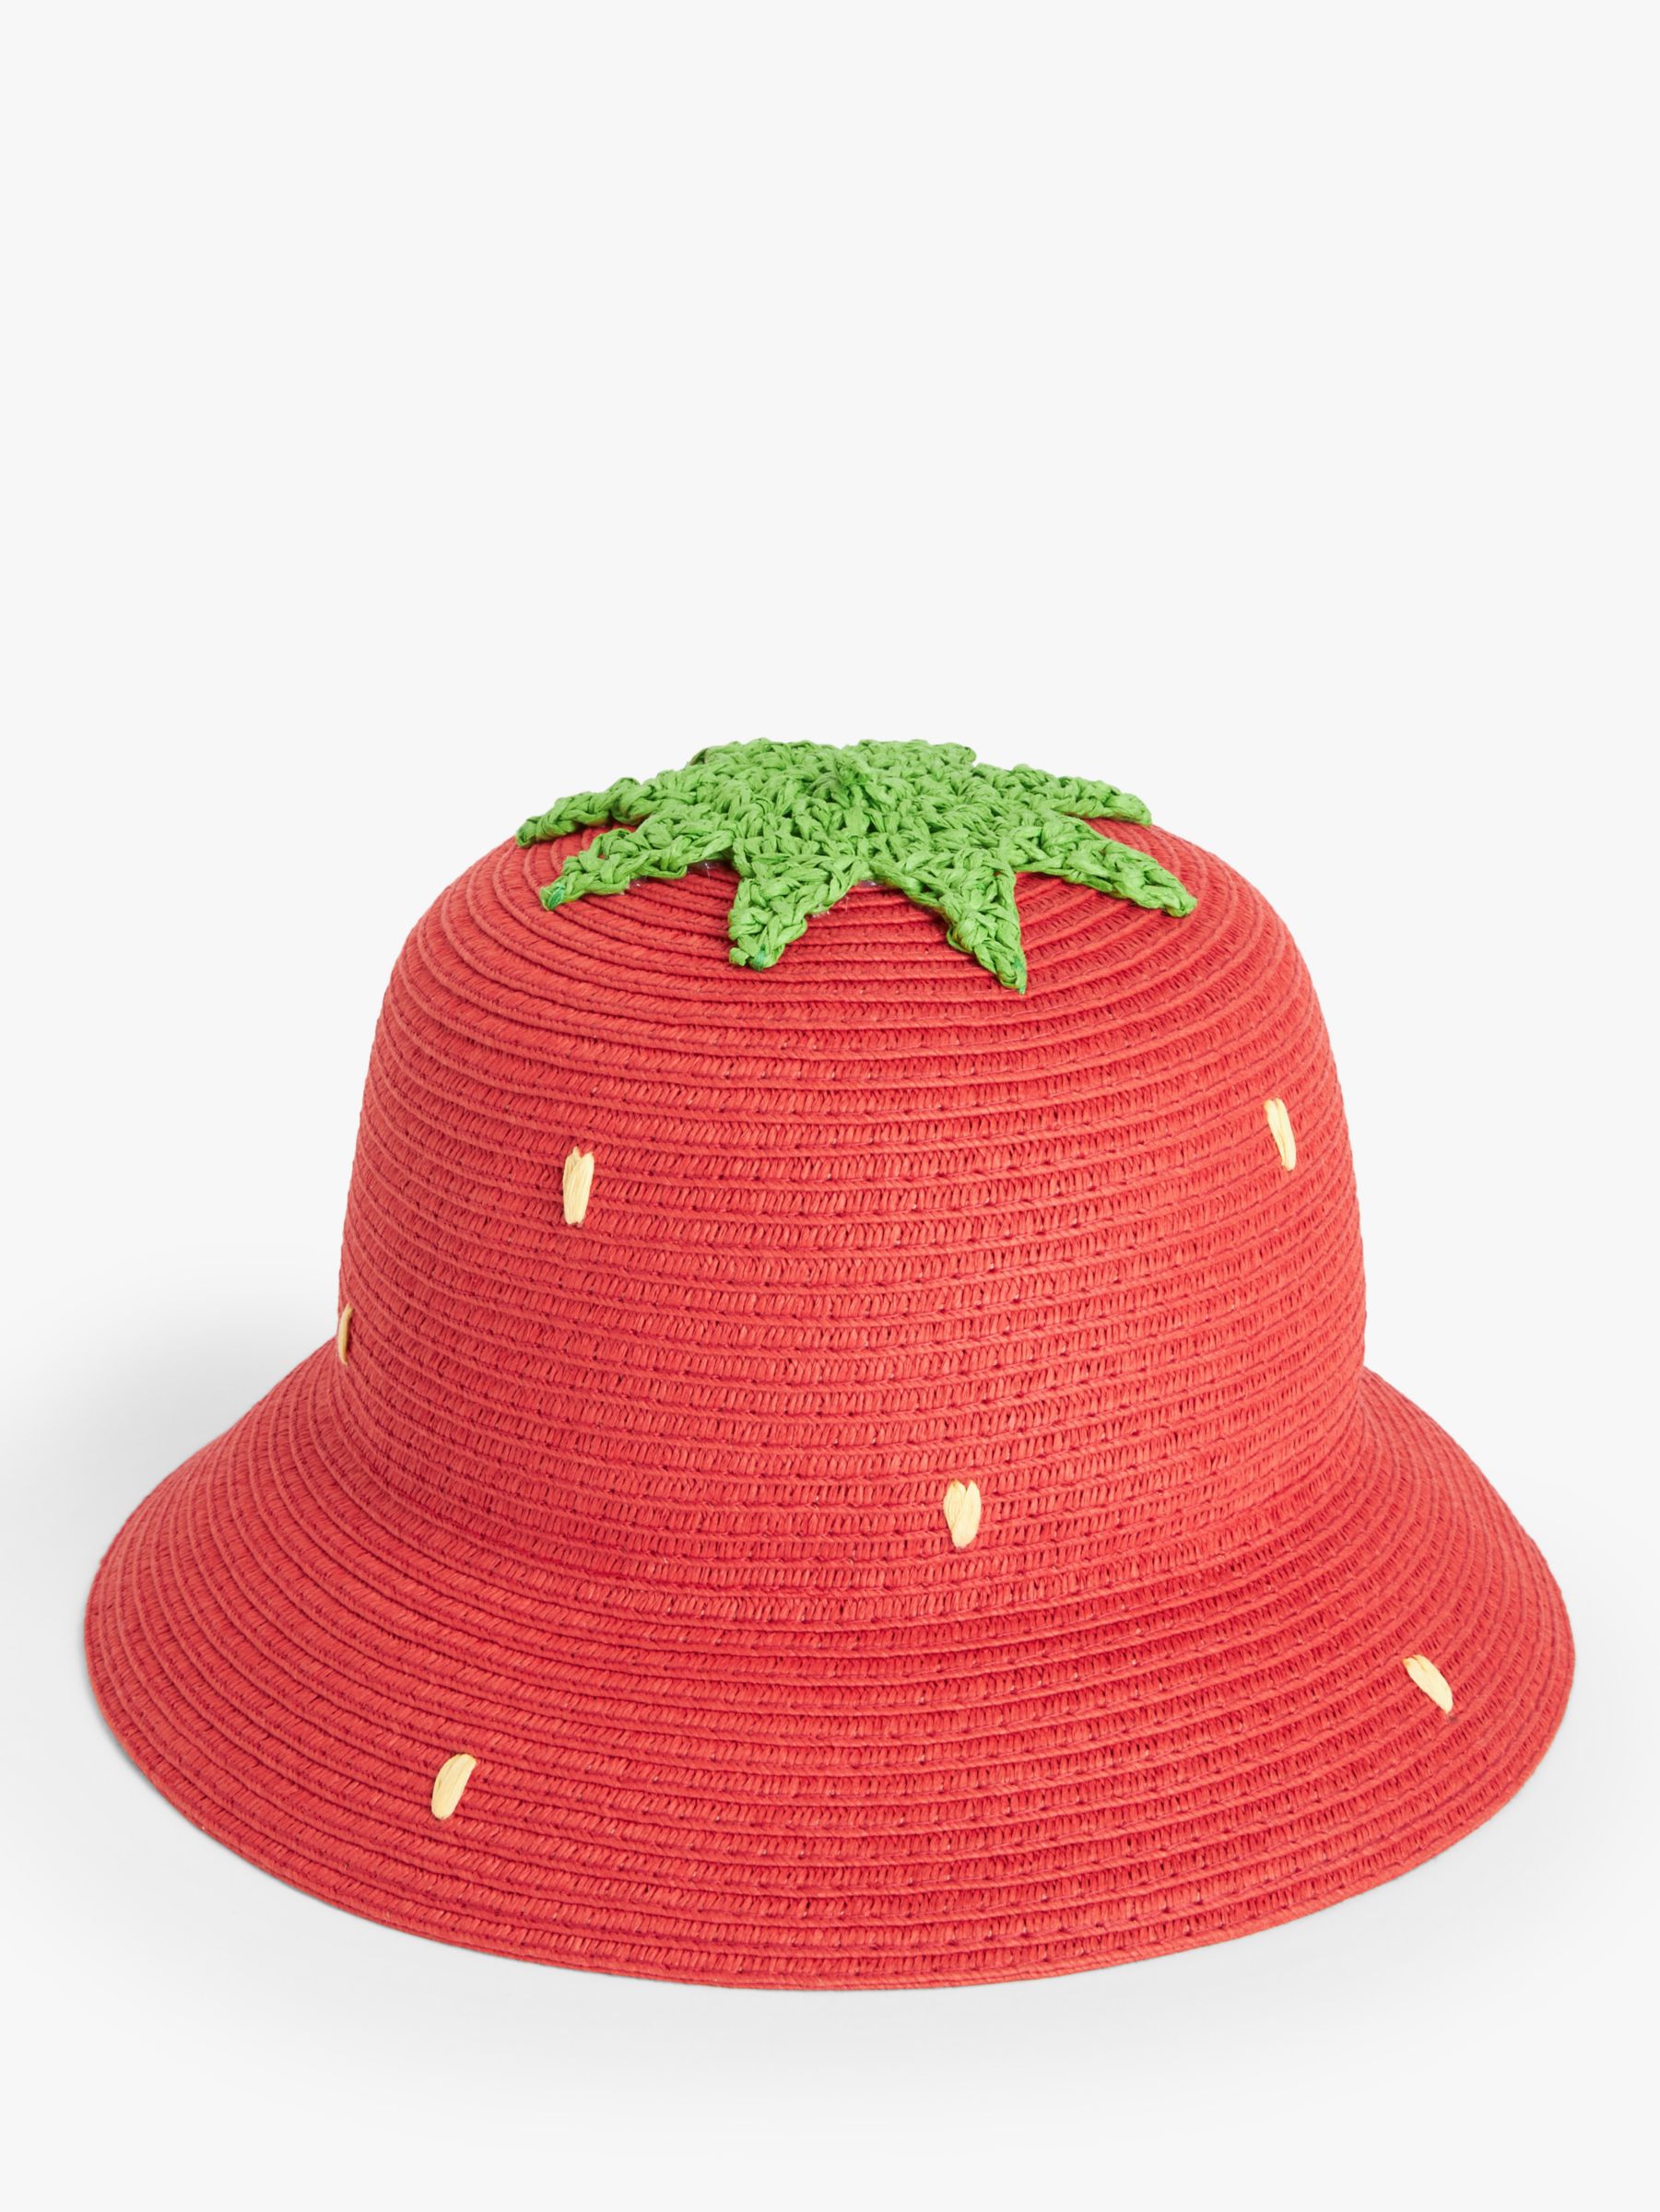 John Lewis Baby Straw Strawberry Hat, Red, L